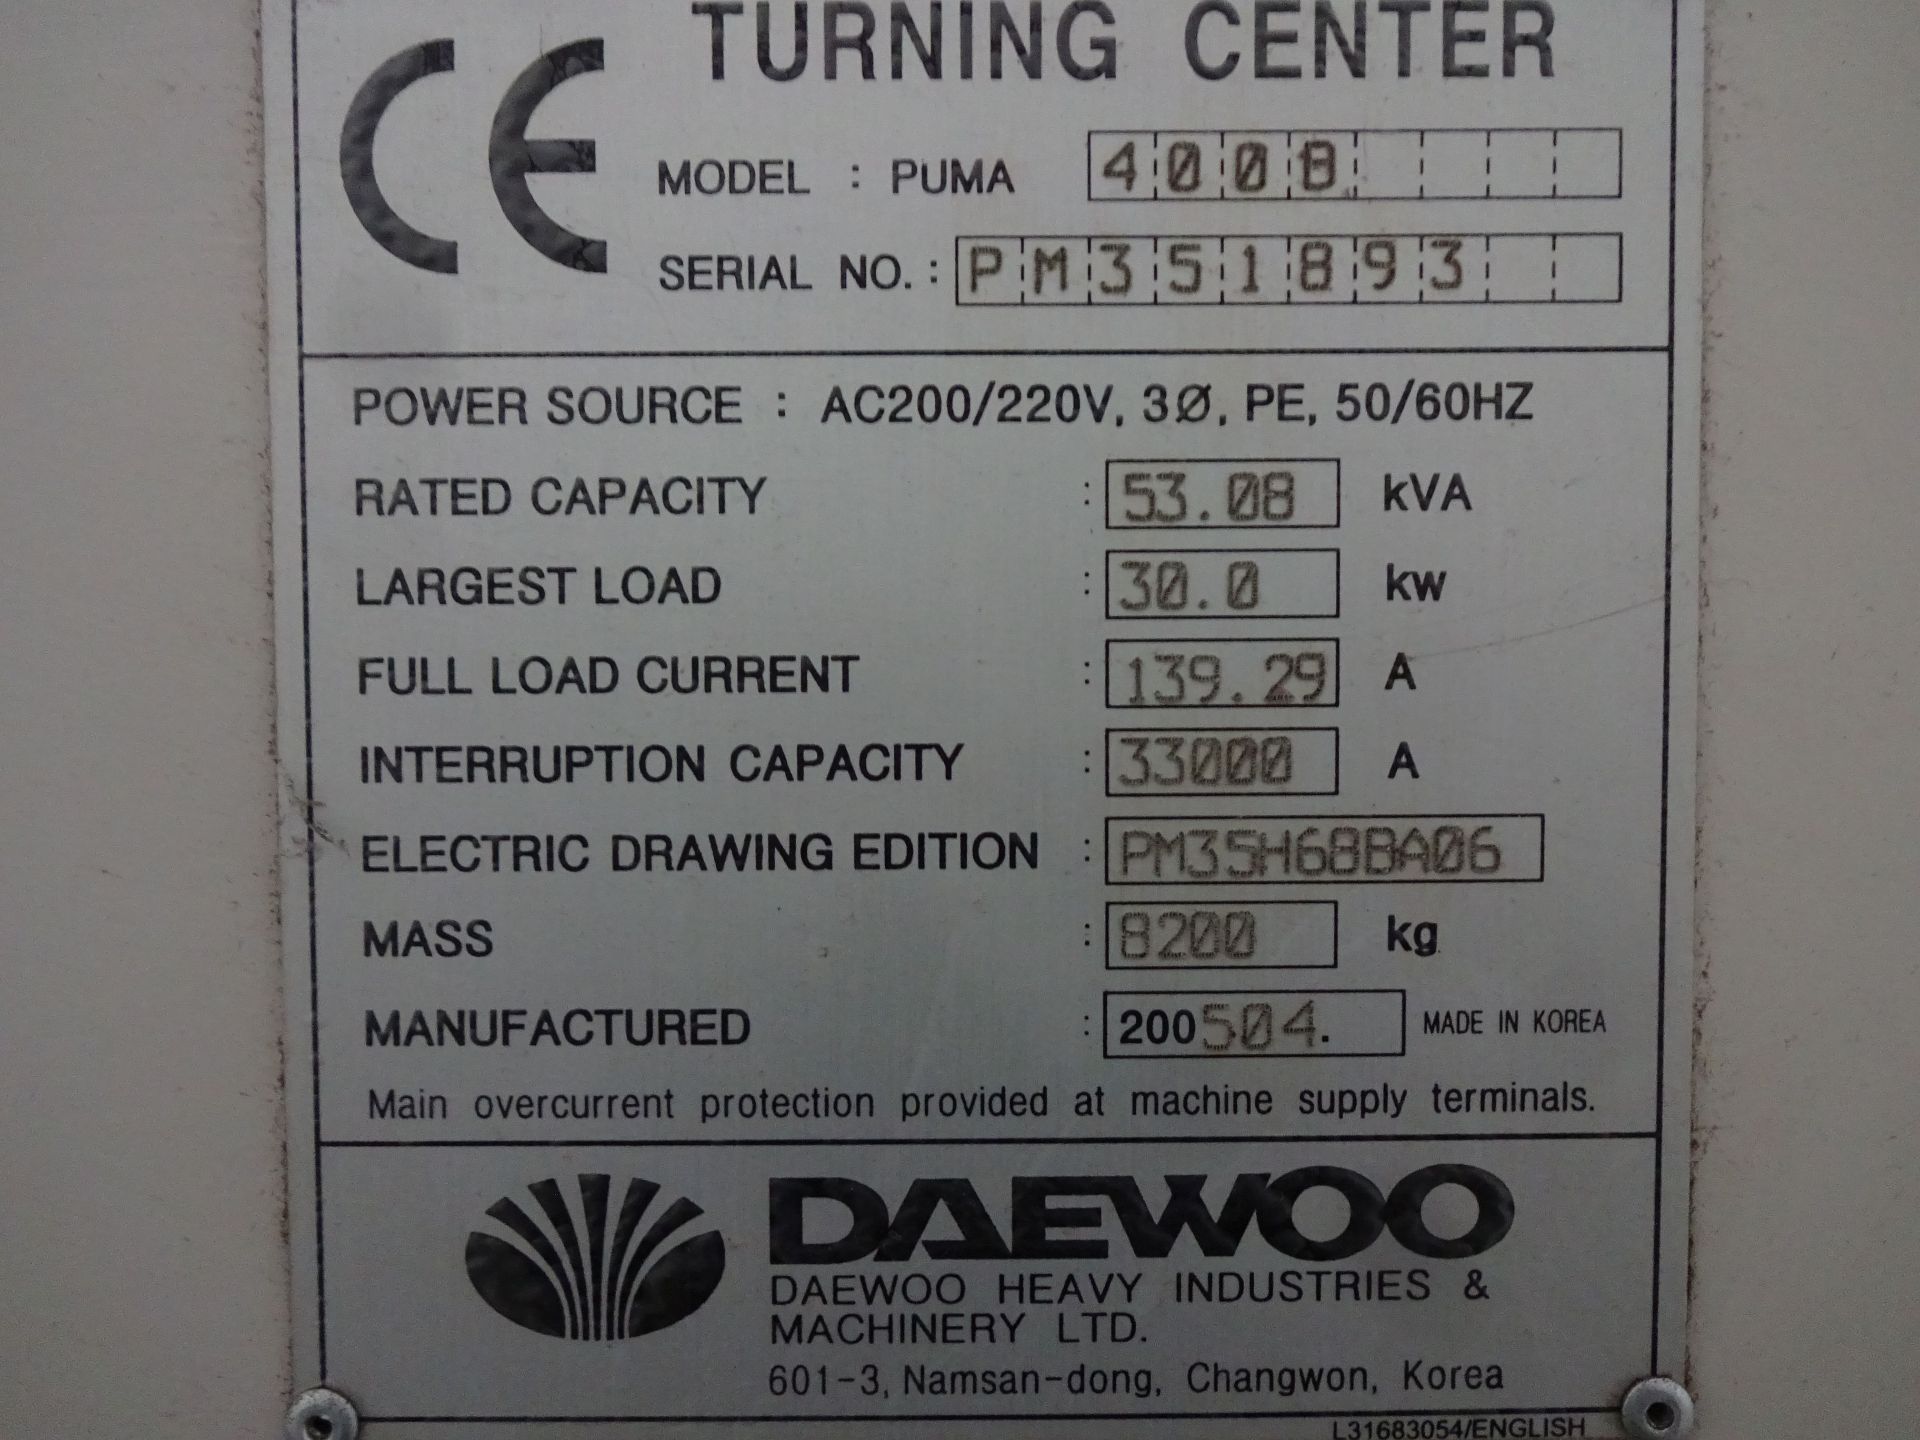 2005 DAEWOO PUMA 400B CNC TURNING CENTER; S/N PM351893, FANUC 21I-TB CONTROL, 18" CHUCK, 30" MAX. - Image 24 of 29